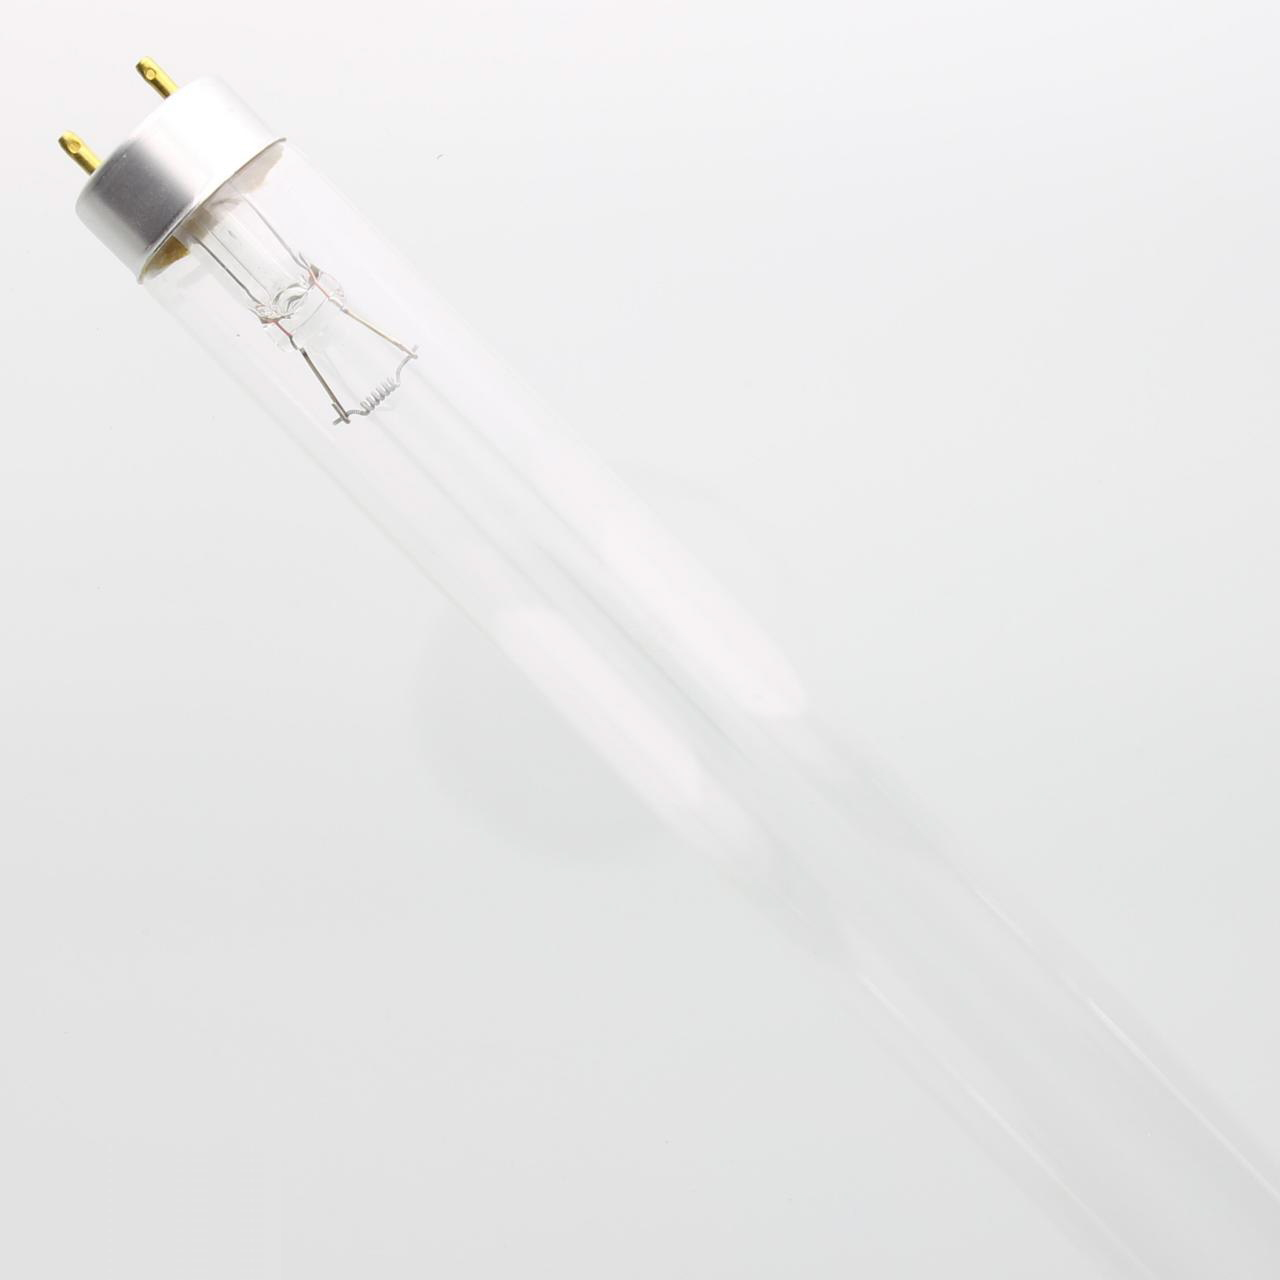 Osram Sylvania G15T8 15W 18" UV Germicidal Lamp - LampTech